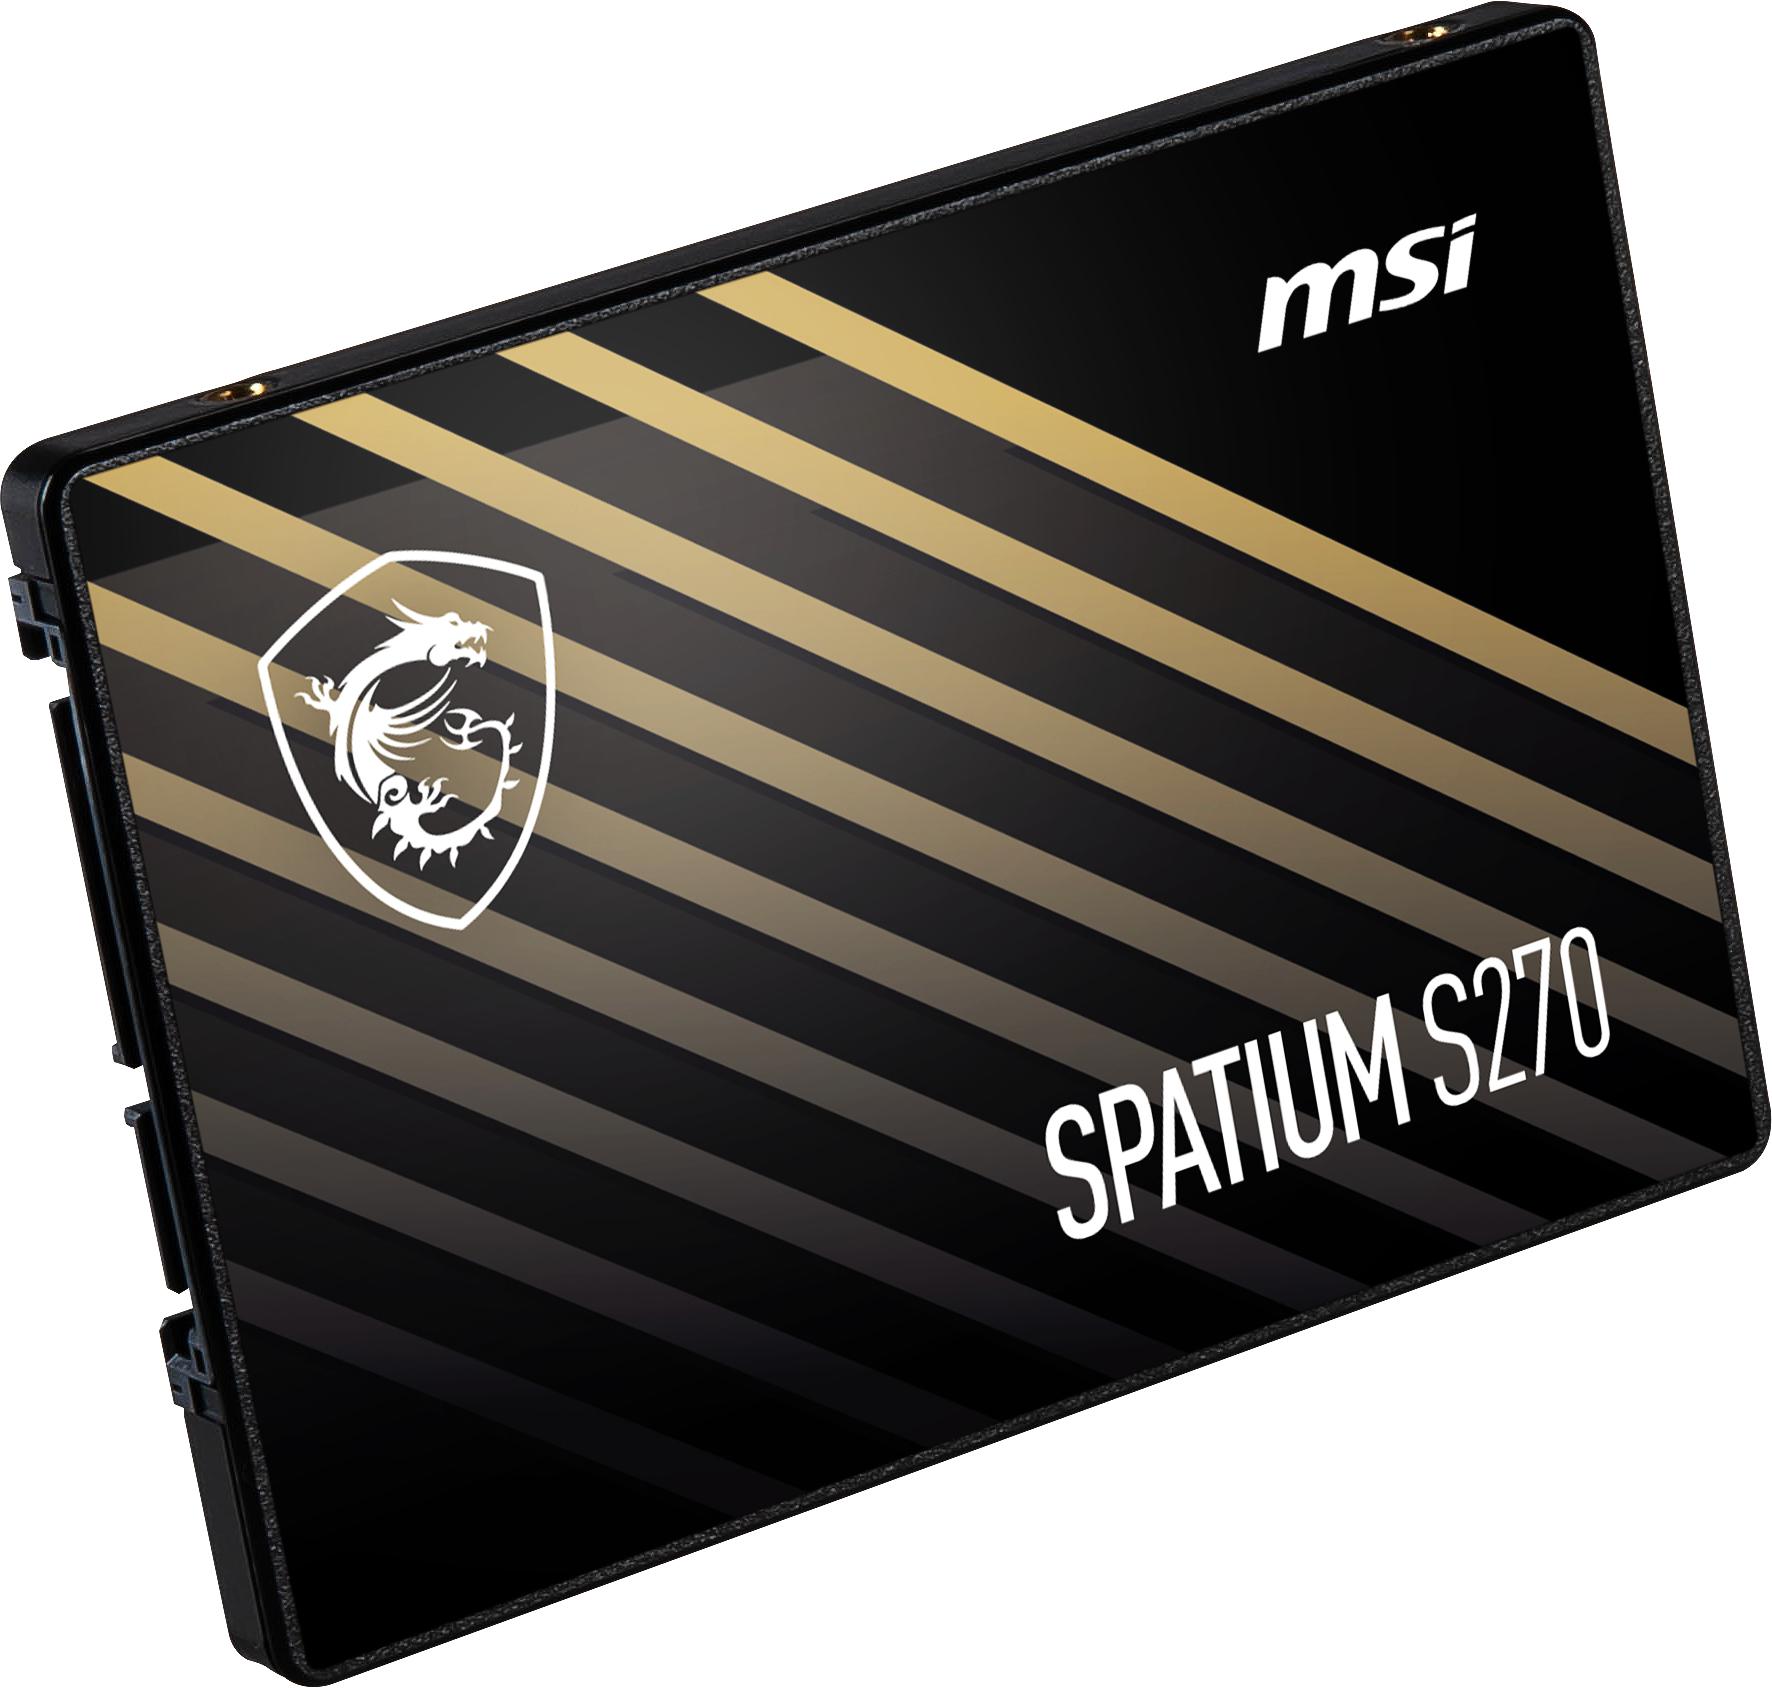 Disco SSD MSI SPATIUM S270 480GB SATA III